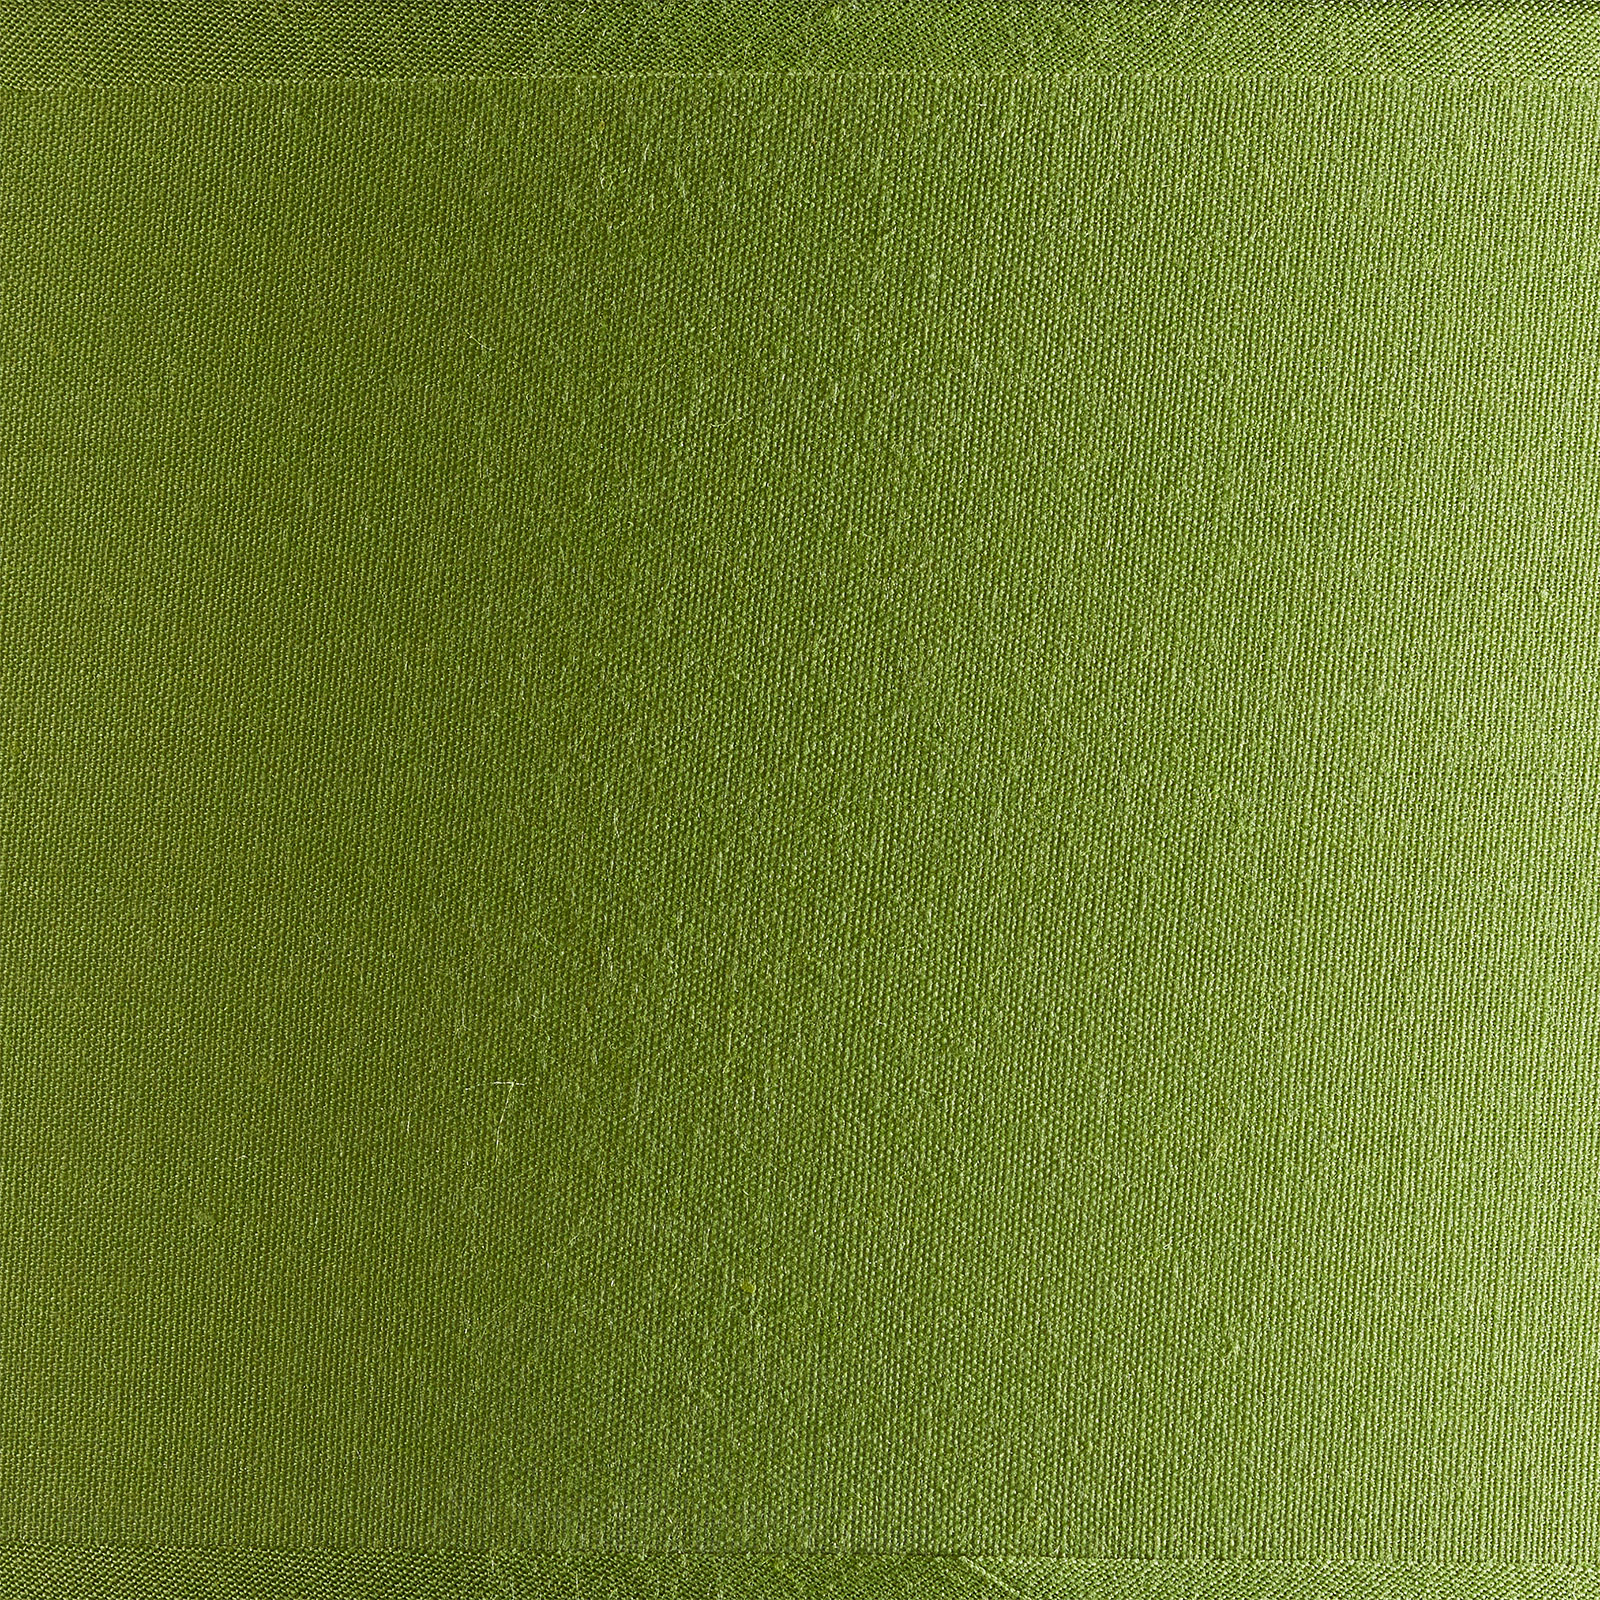 Grüne Textil-Deckenleuchte Jitendra